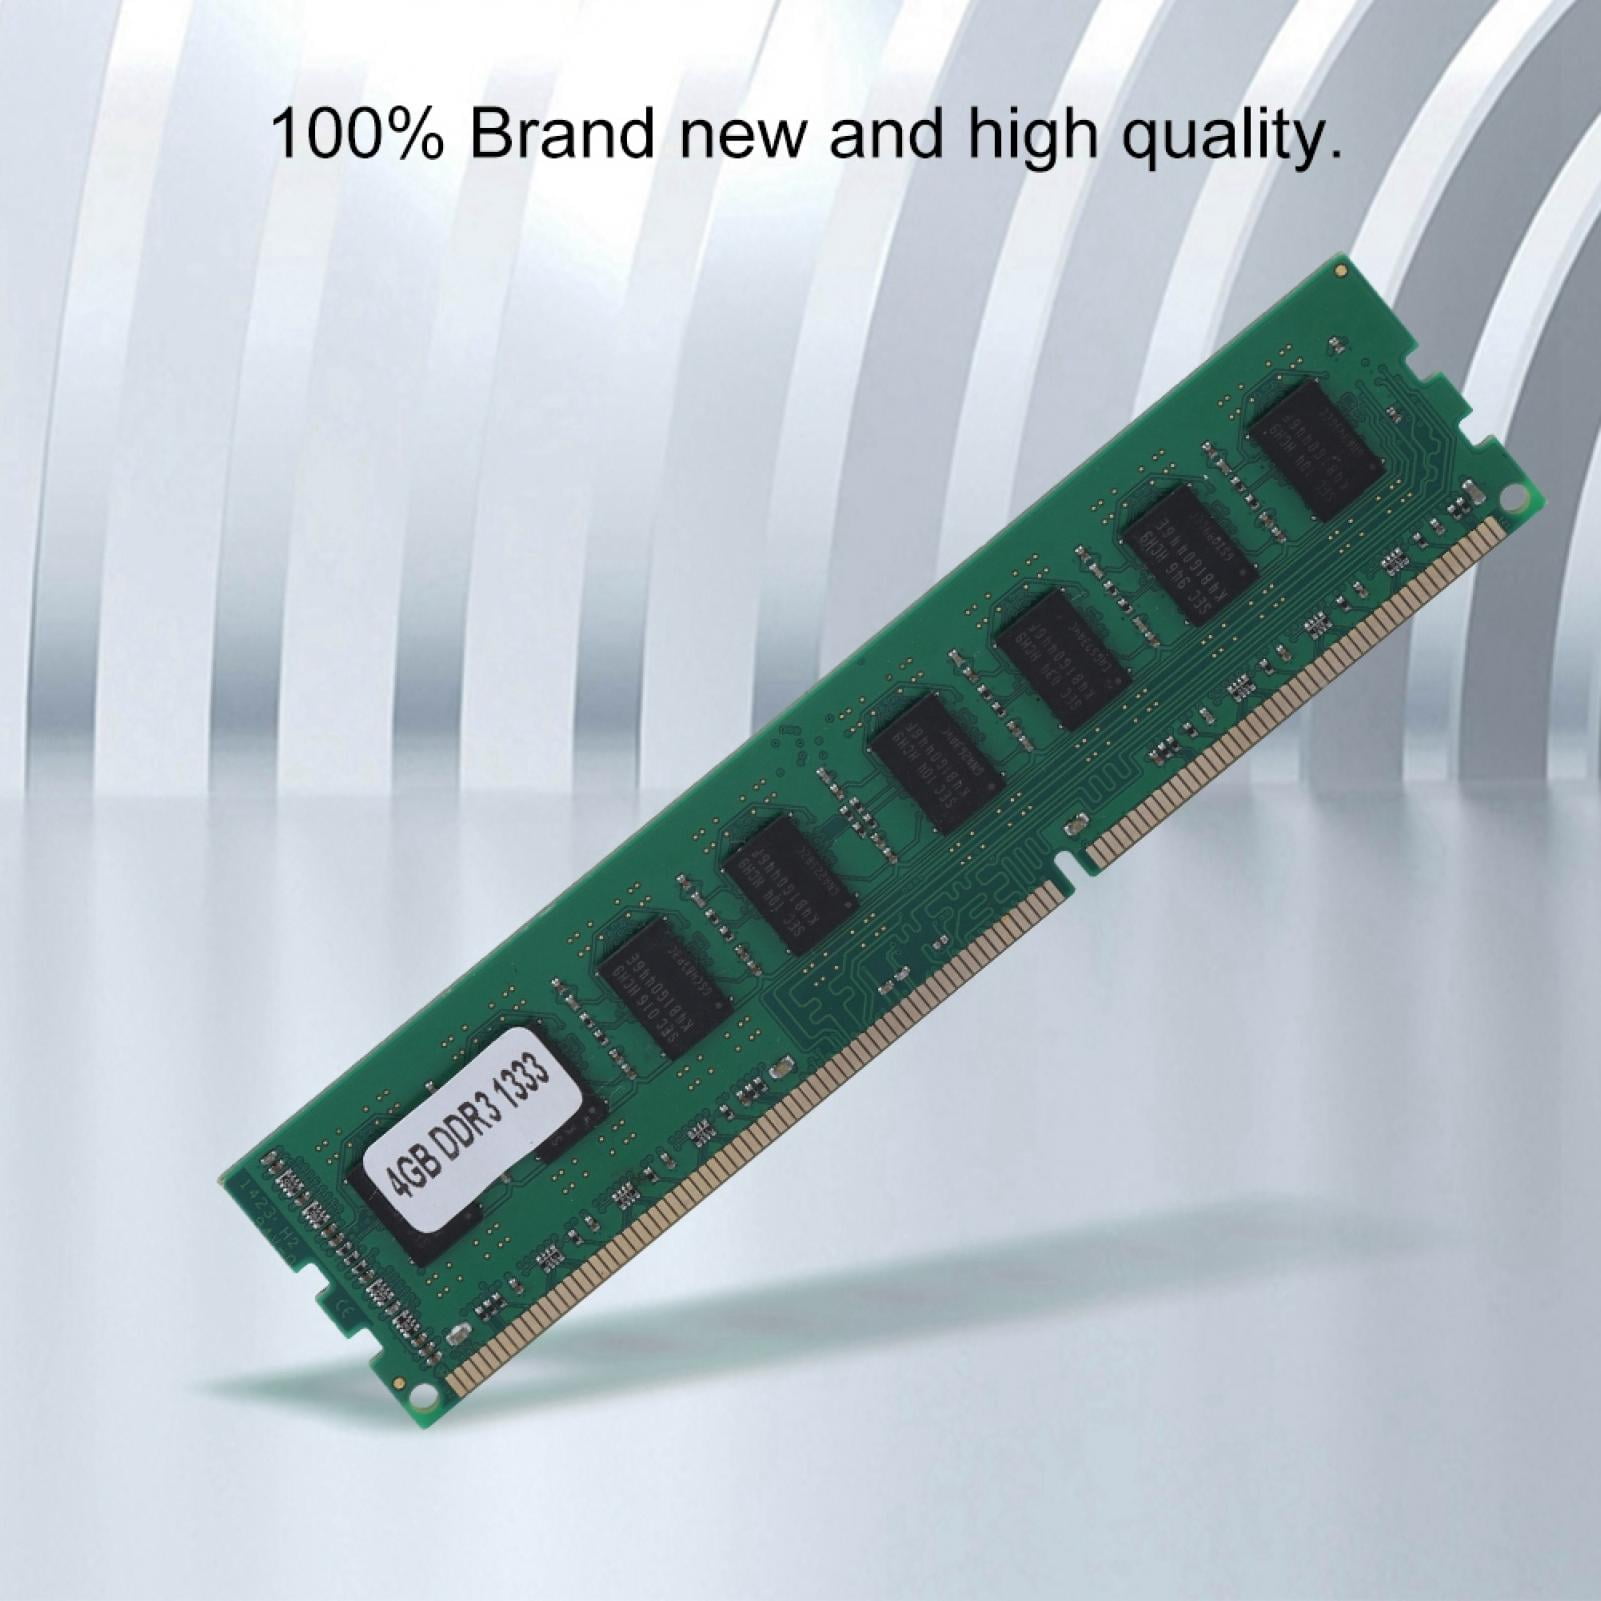 DDR3 Memory,4GB DDR3 1333MHz 240Pin RAM,AMD Desktop Motherboard Dedicated Memory Bank RAM,100% Brand New and 